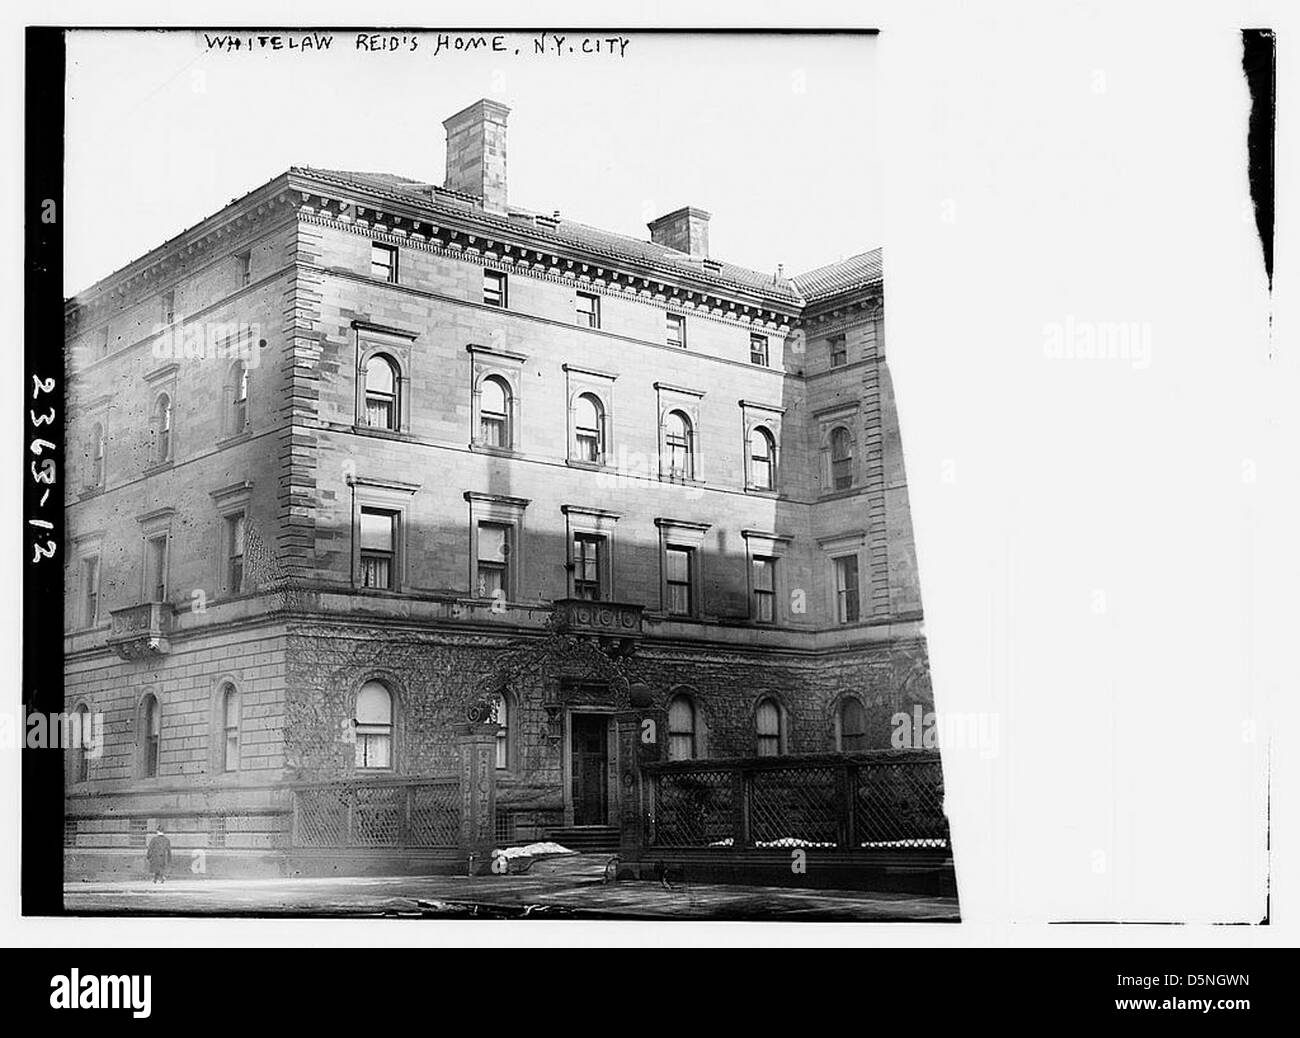 Whitelaw Reid Haus, N.Y.C (LOC) Stockfoto